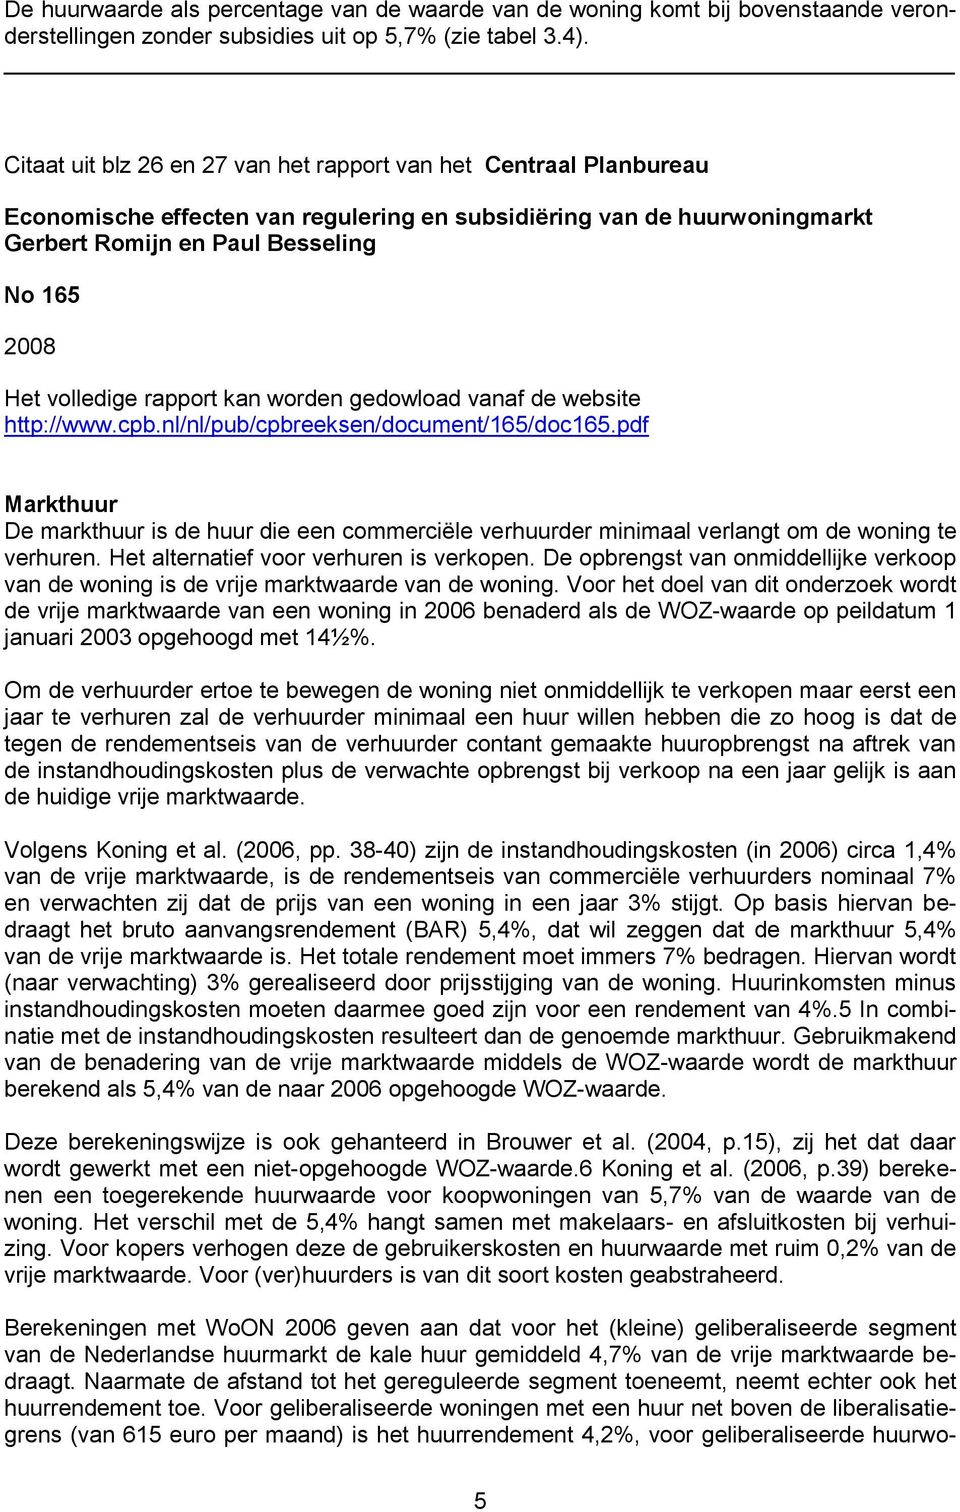 volledige rapport kan worden gedowload vanaf de website http://www.cpb.nl/nl/pub/cpbreeksen/document/165/doc165.